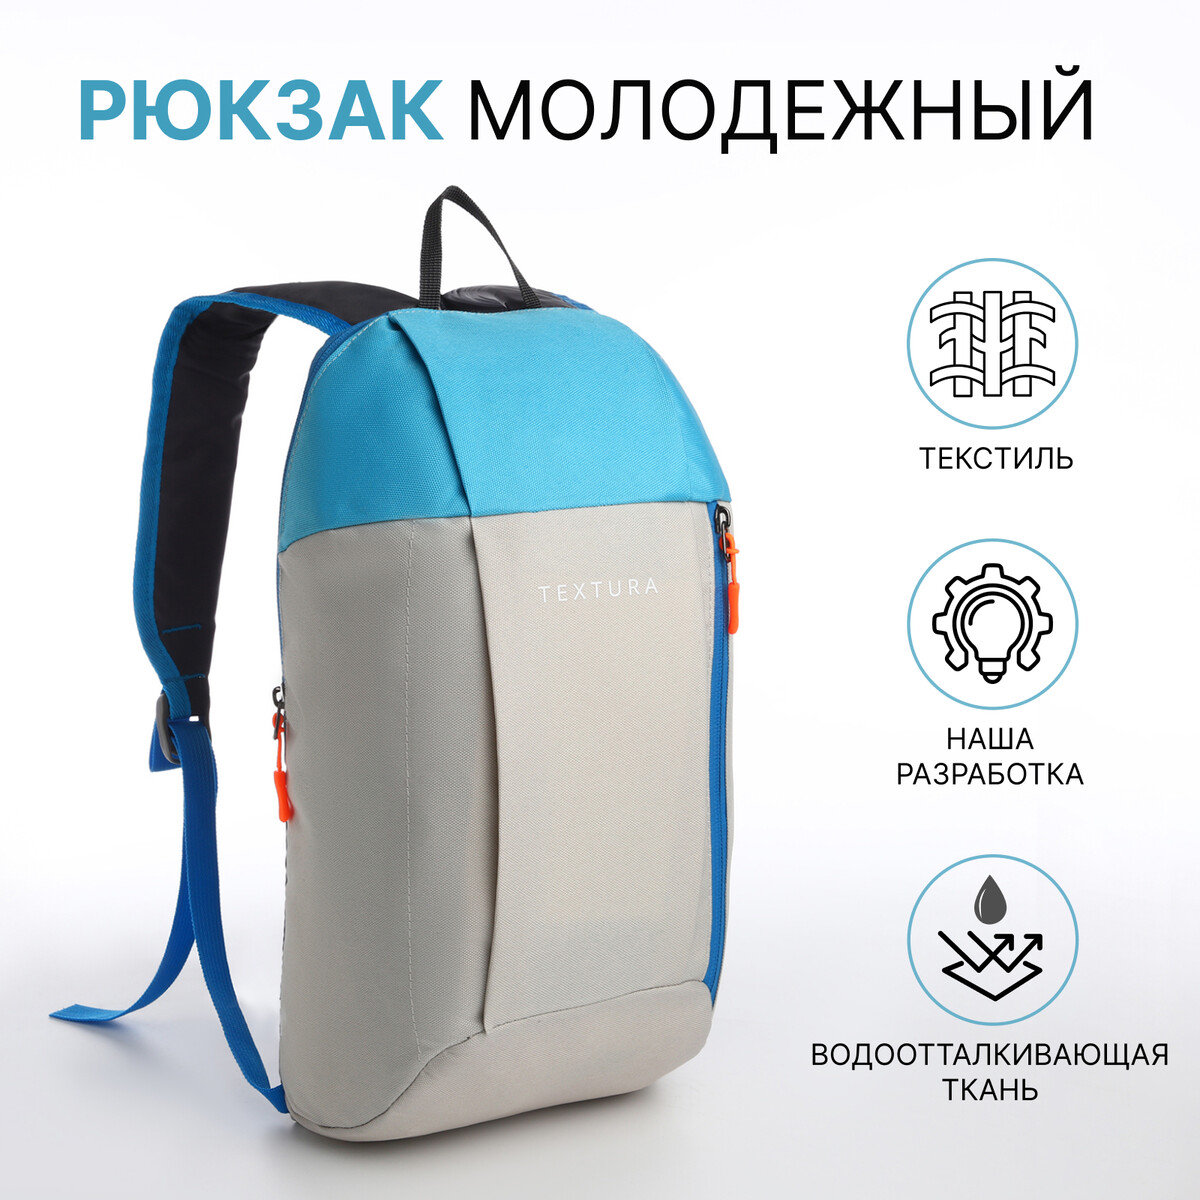 Рюкзак спортивный на молнии textura, наружный карман, цвет бежевый/голубой рюкзак brauberg positive ducks карман антивор 42x28x14 см